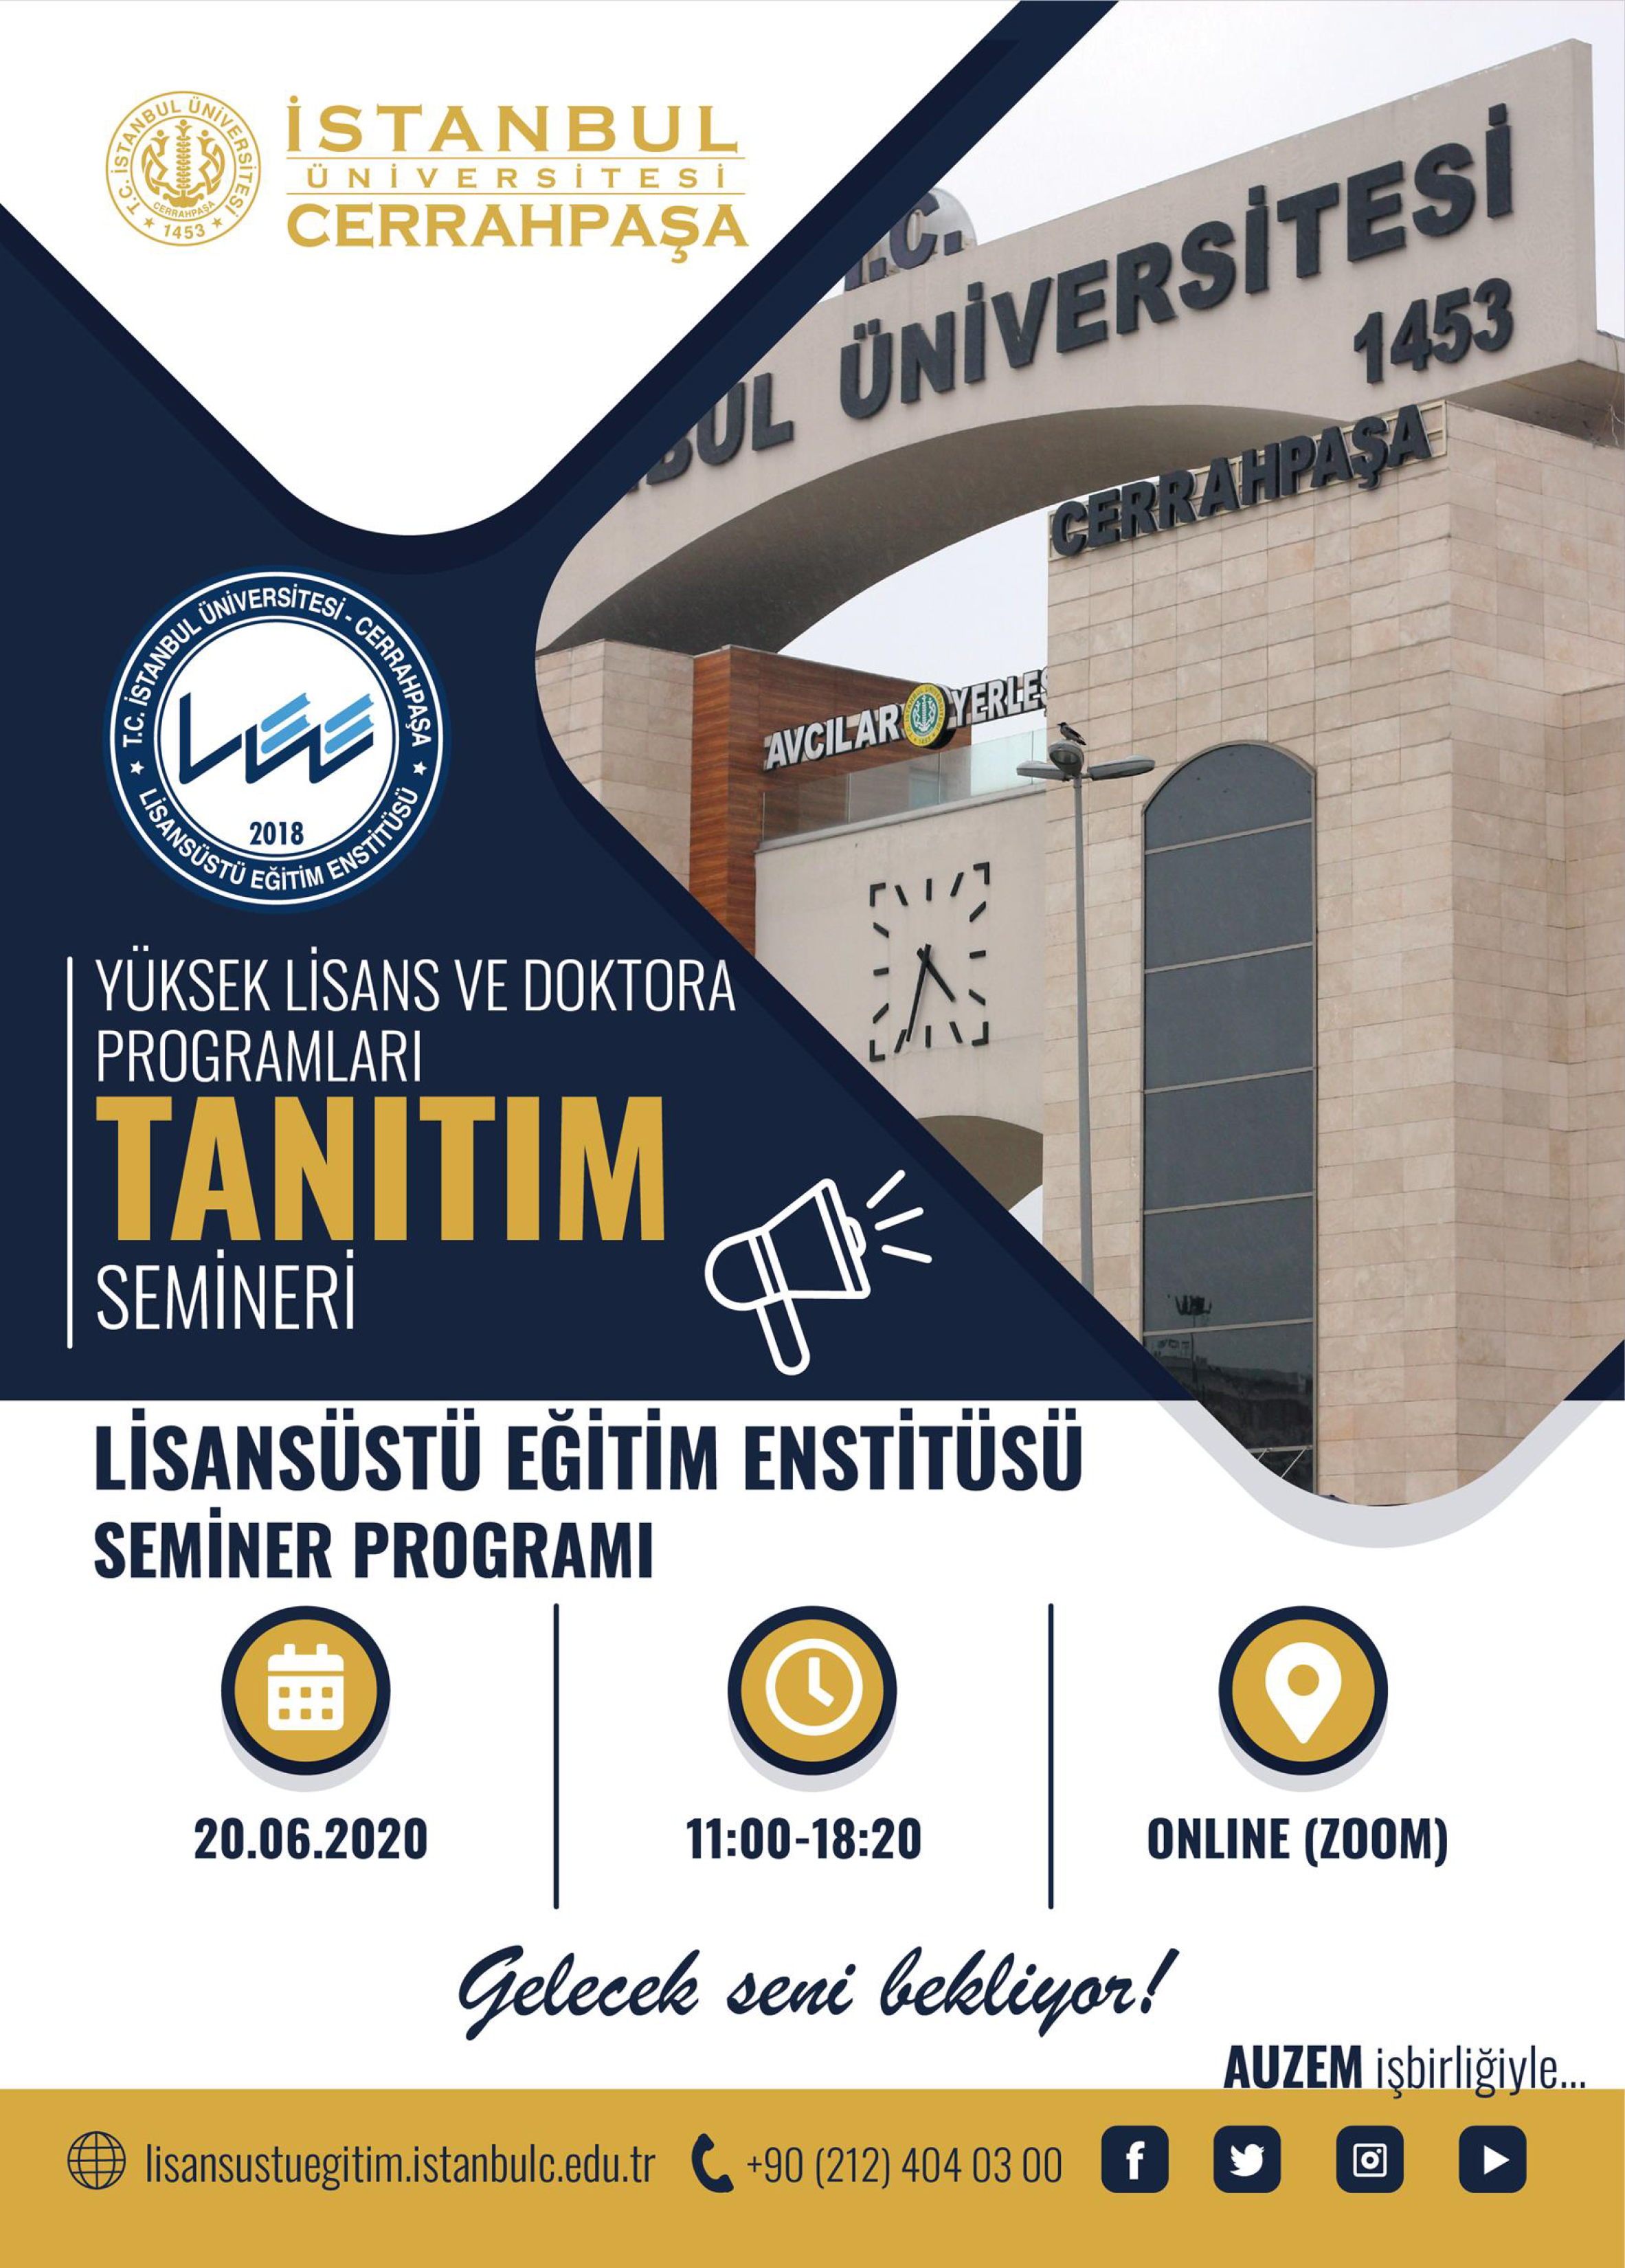 istanbul universitesi cerrahpasa lisansustu egitim enstitusu yuksek lisans ve doktora programi tanitimi omu ondokuz mayis universitesi